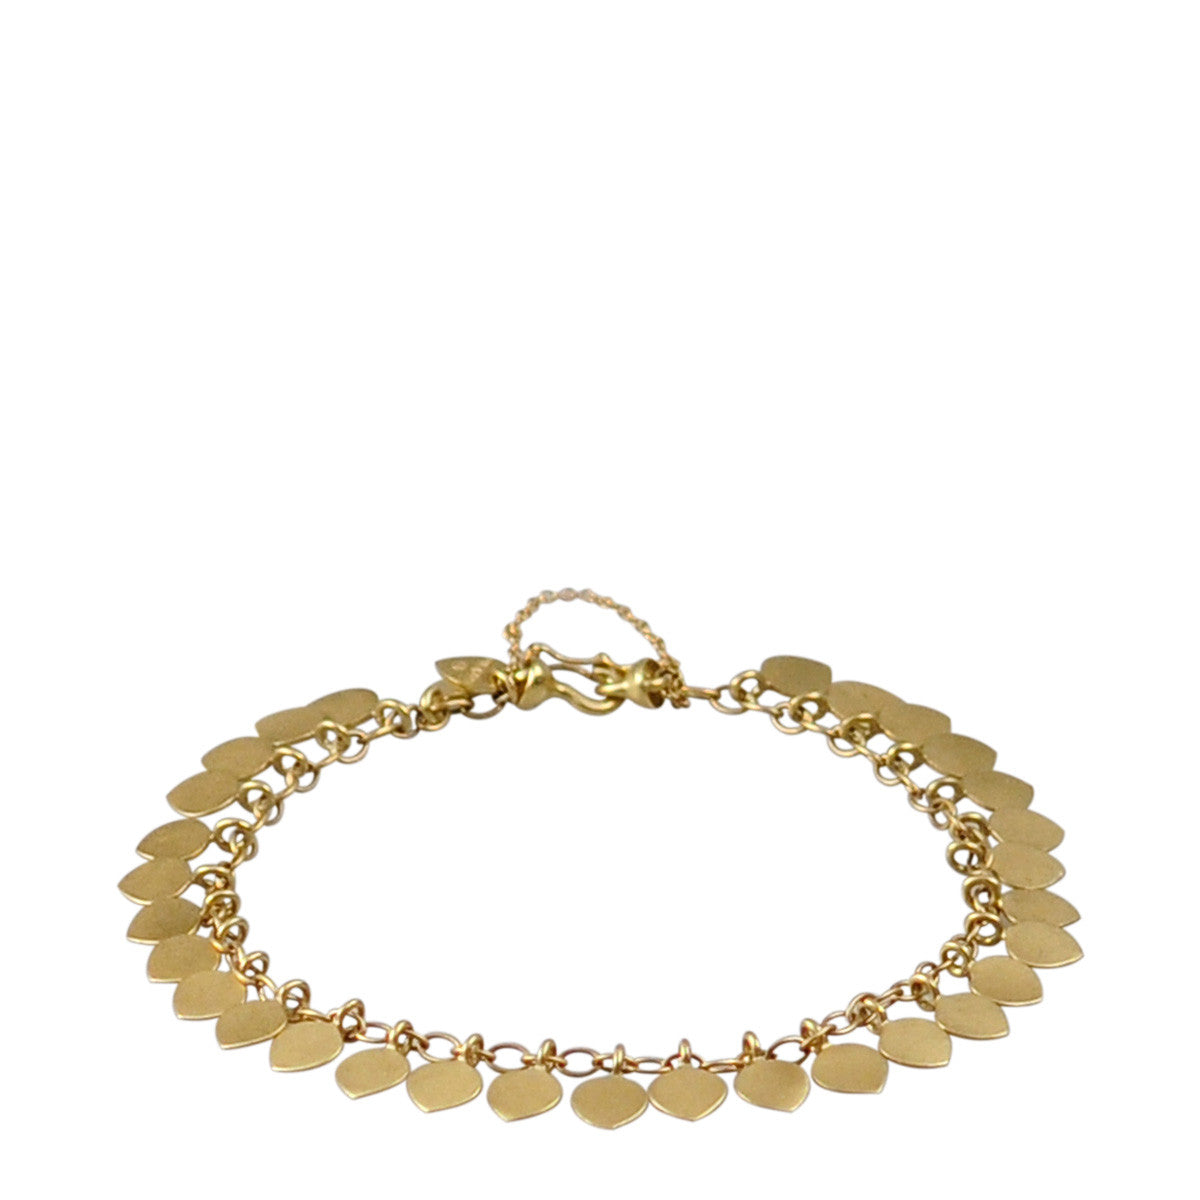 18K Gold Full Lotus Petal Bracelet